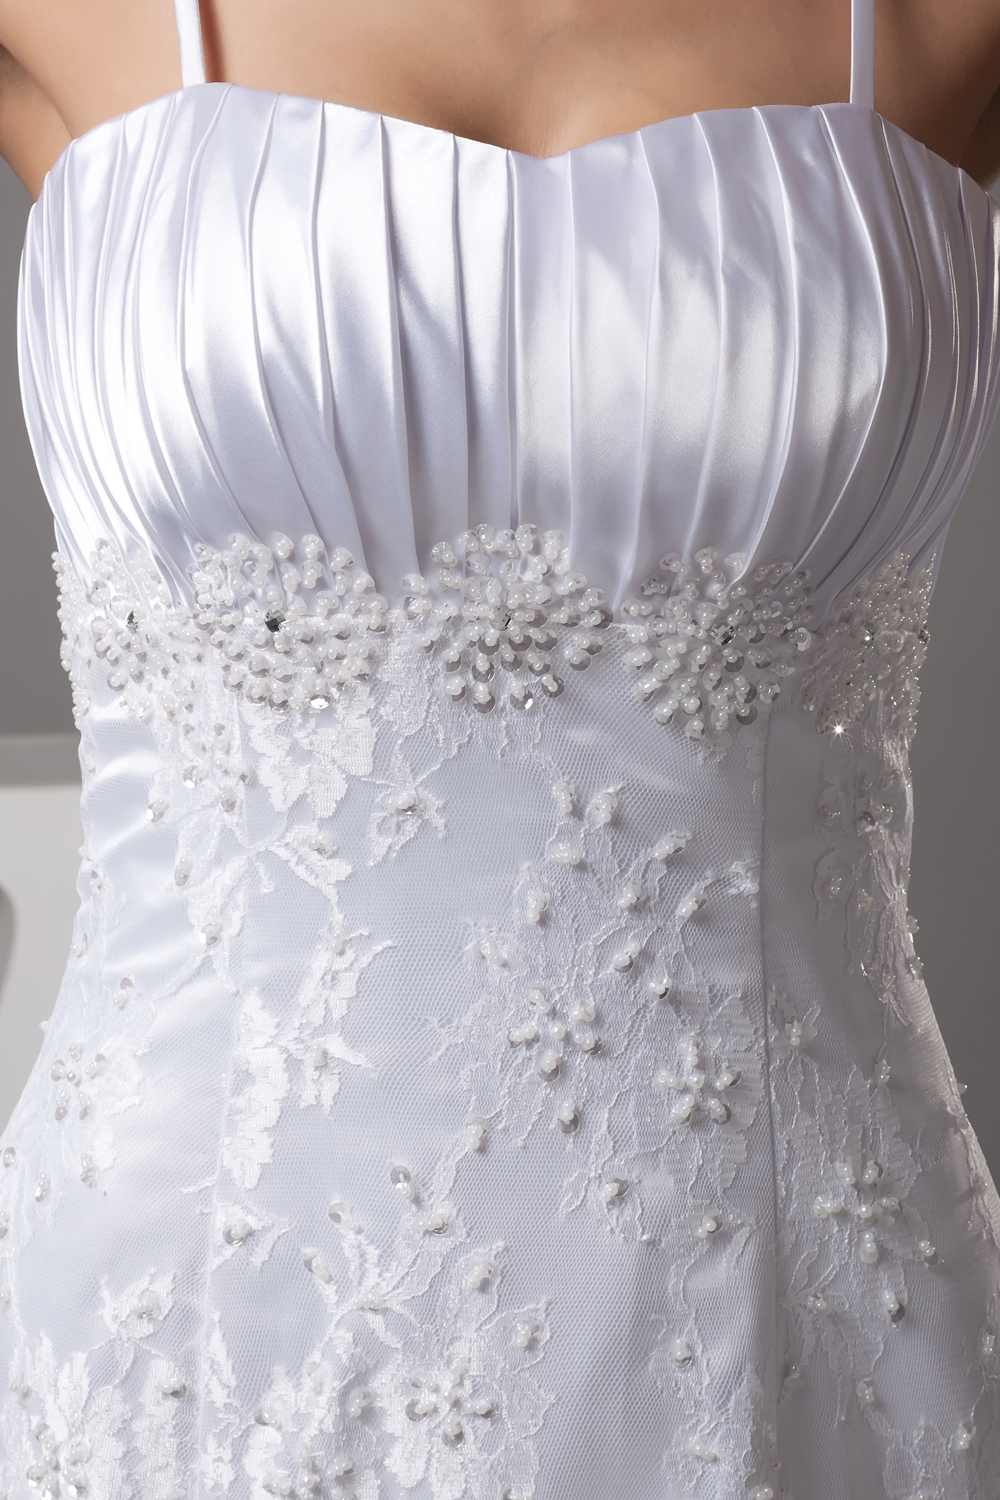 A-line Spaghetti Straps Lace Court Train Wedding Dress